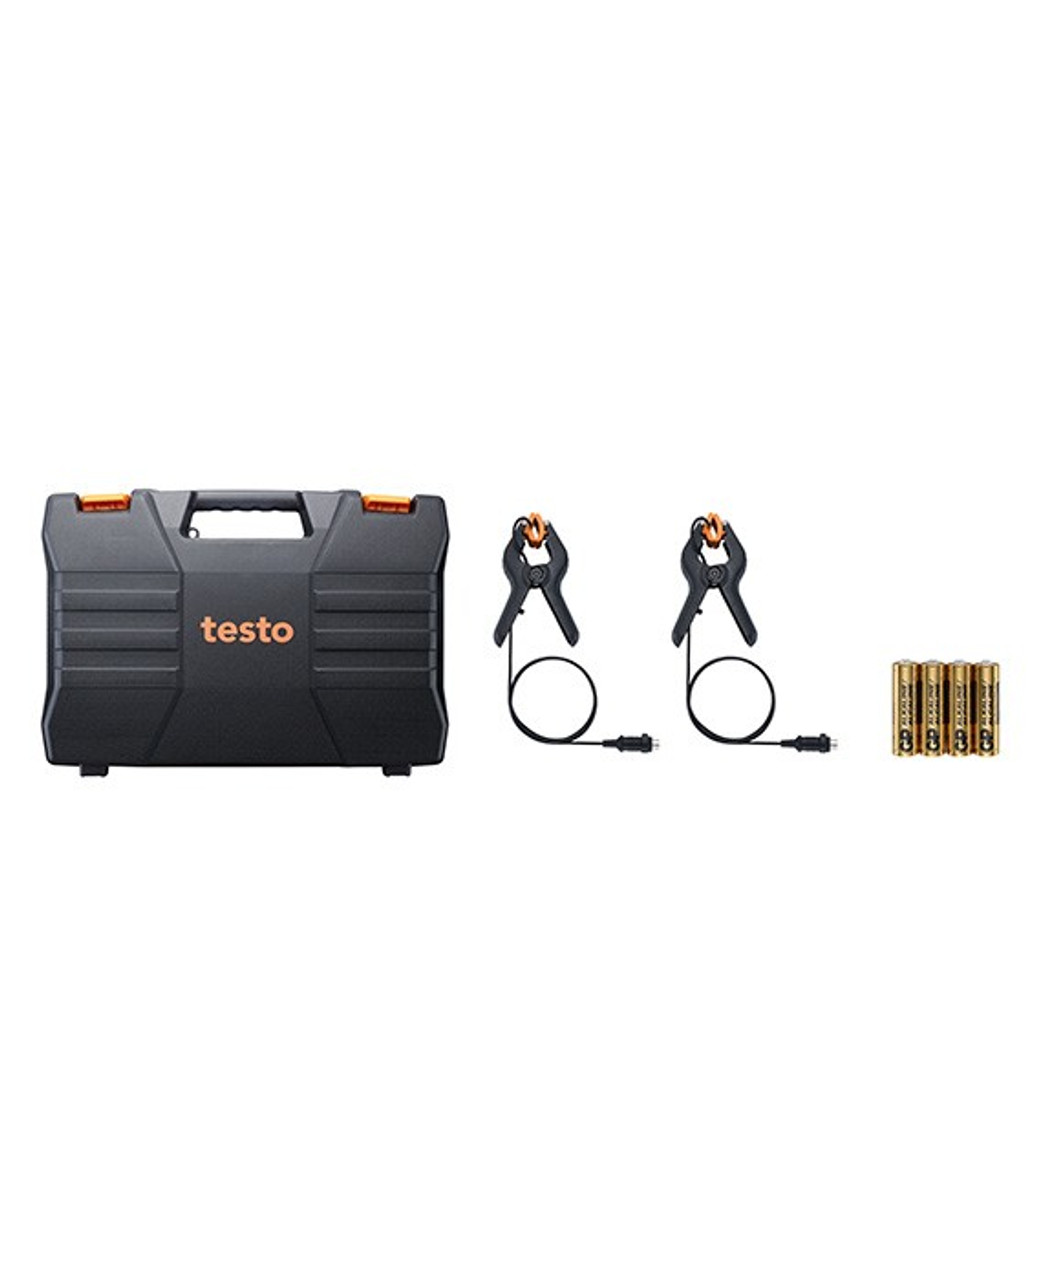 Testo 550 Digital Manifold Kit With Bluetooth And Hard Case 0563 1550